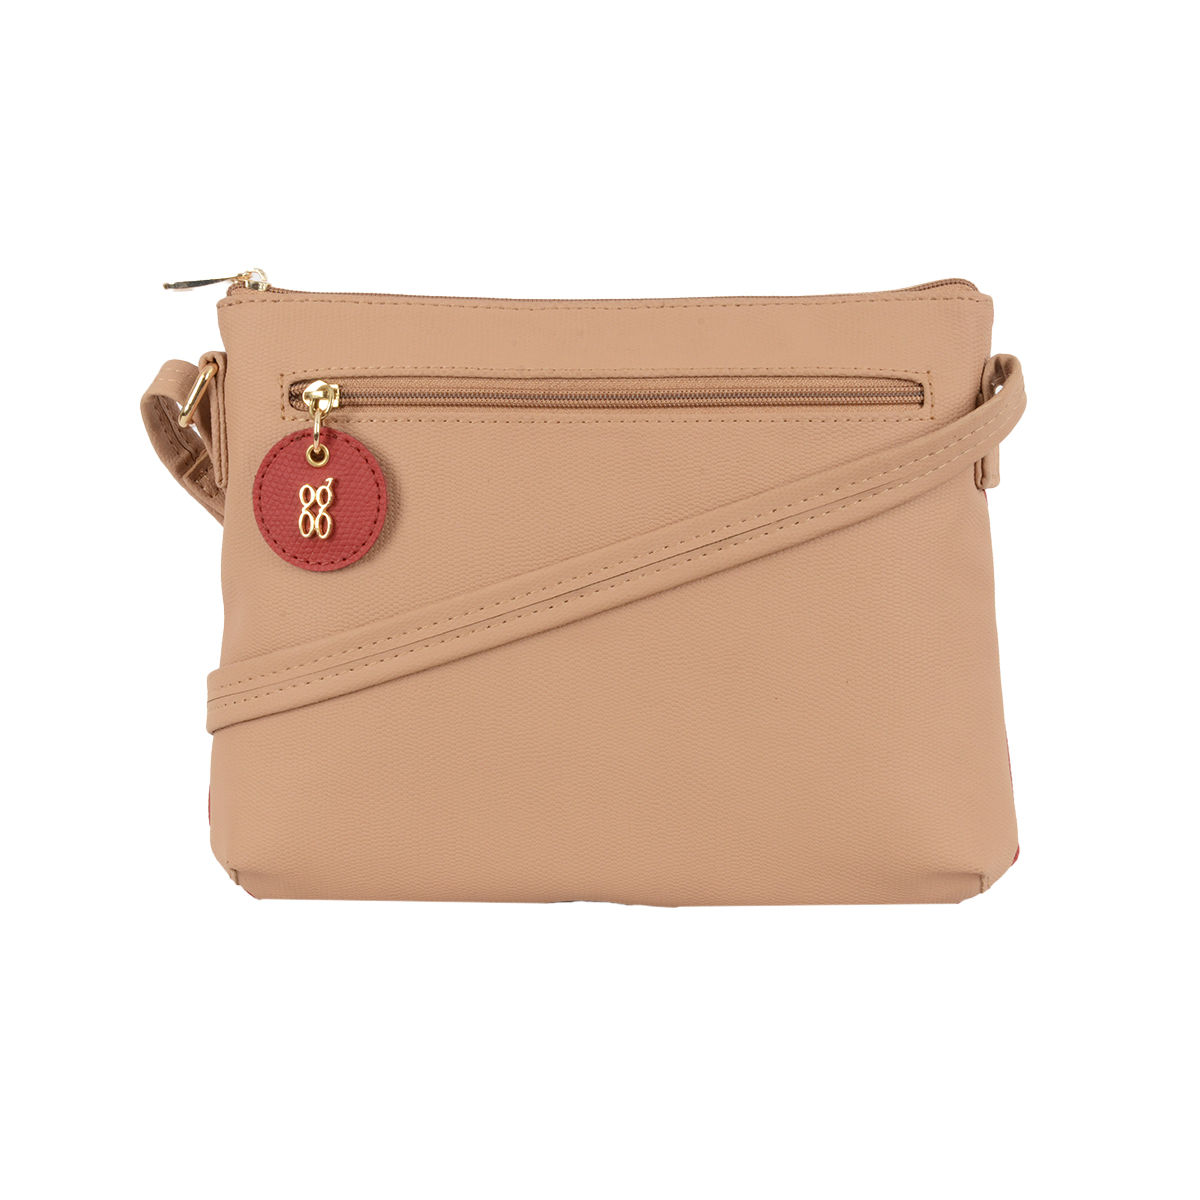 270618) Shraddha kapoor for Baggit! | Trendy purses, Leather crossbody bag  small, Purses and handbags